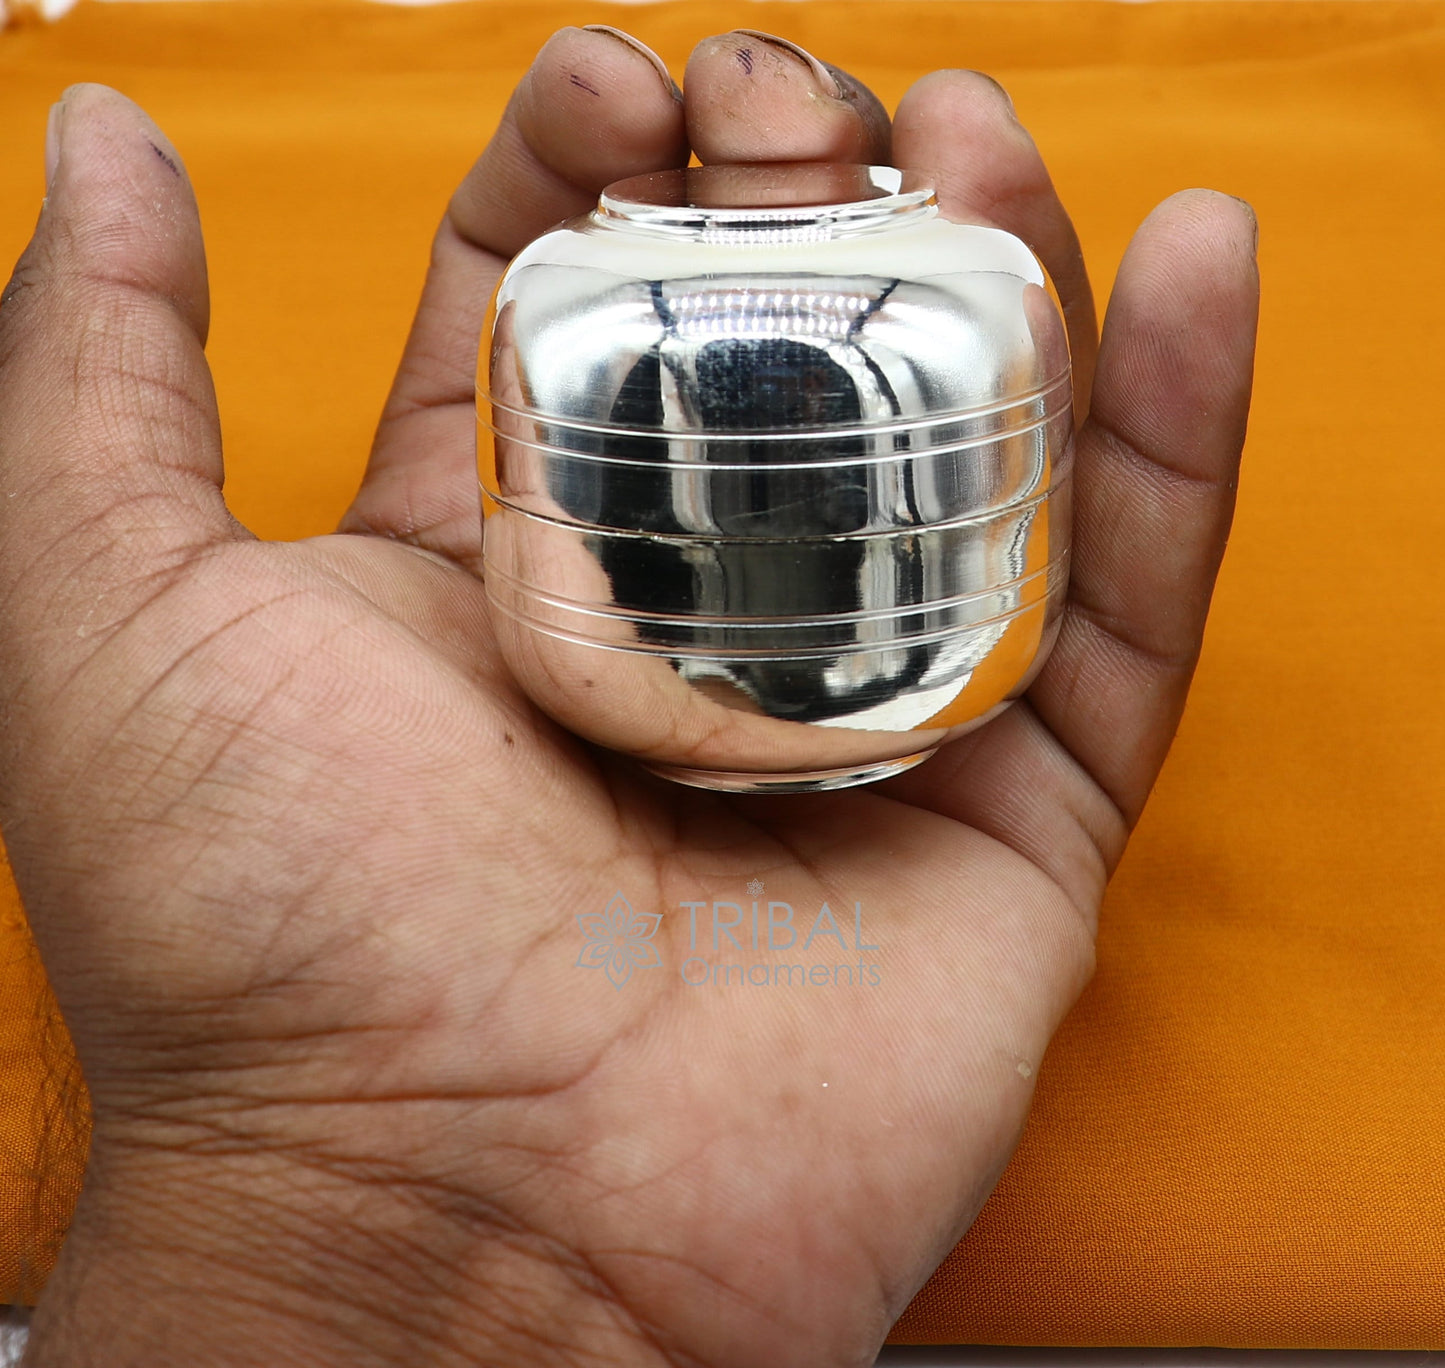 999 fine silver handmade gorgeous small idol's Prasadam box, trinket box, container box, solid silver puja article utensils su1107 - TRIBAL ORNAMENTS